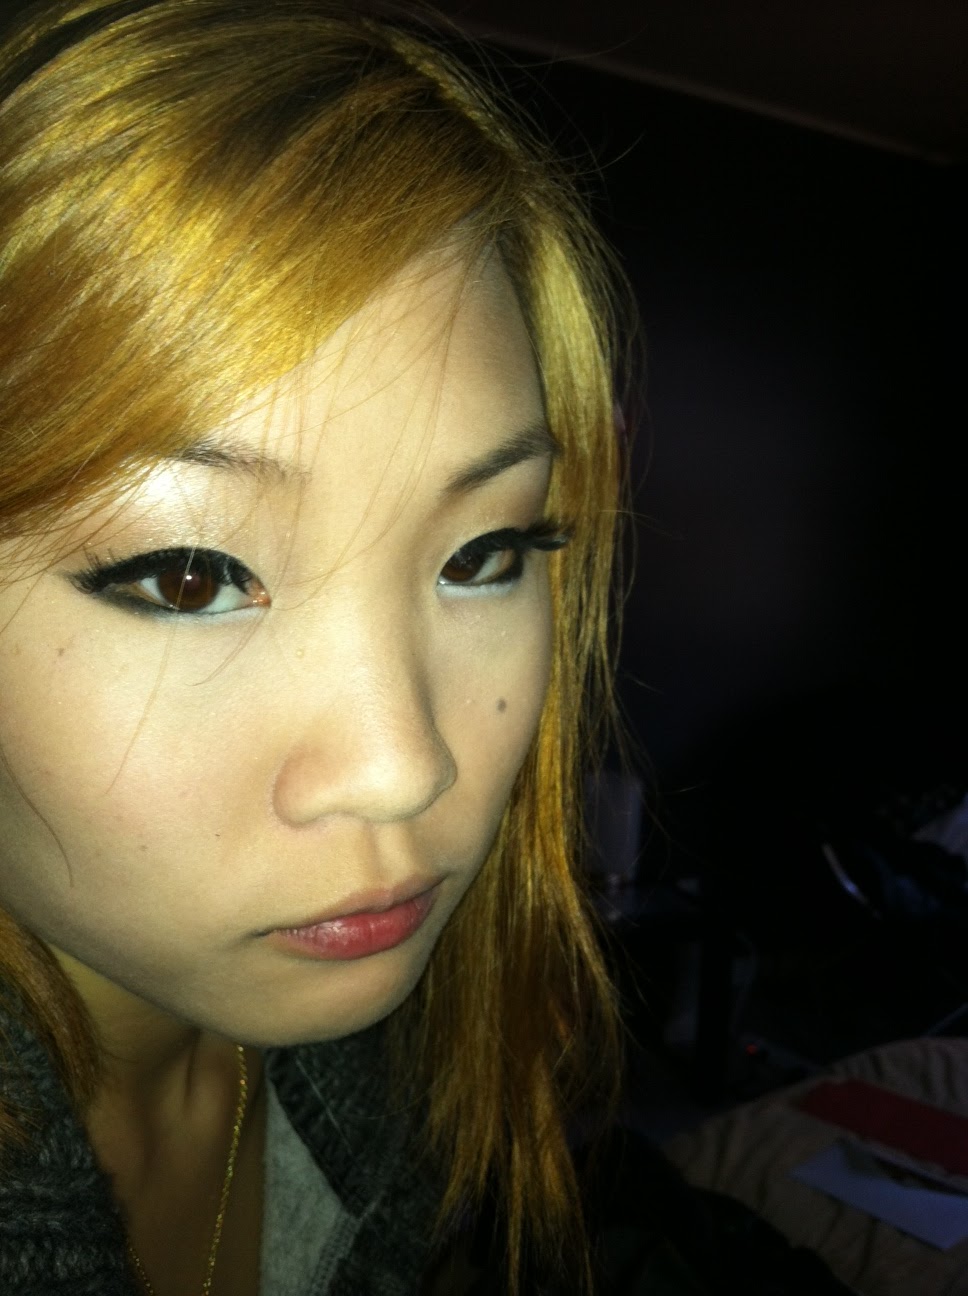 webcam Blonde otngagged asian